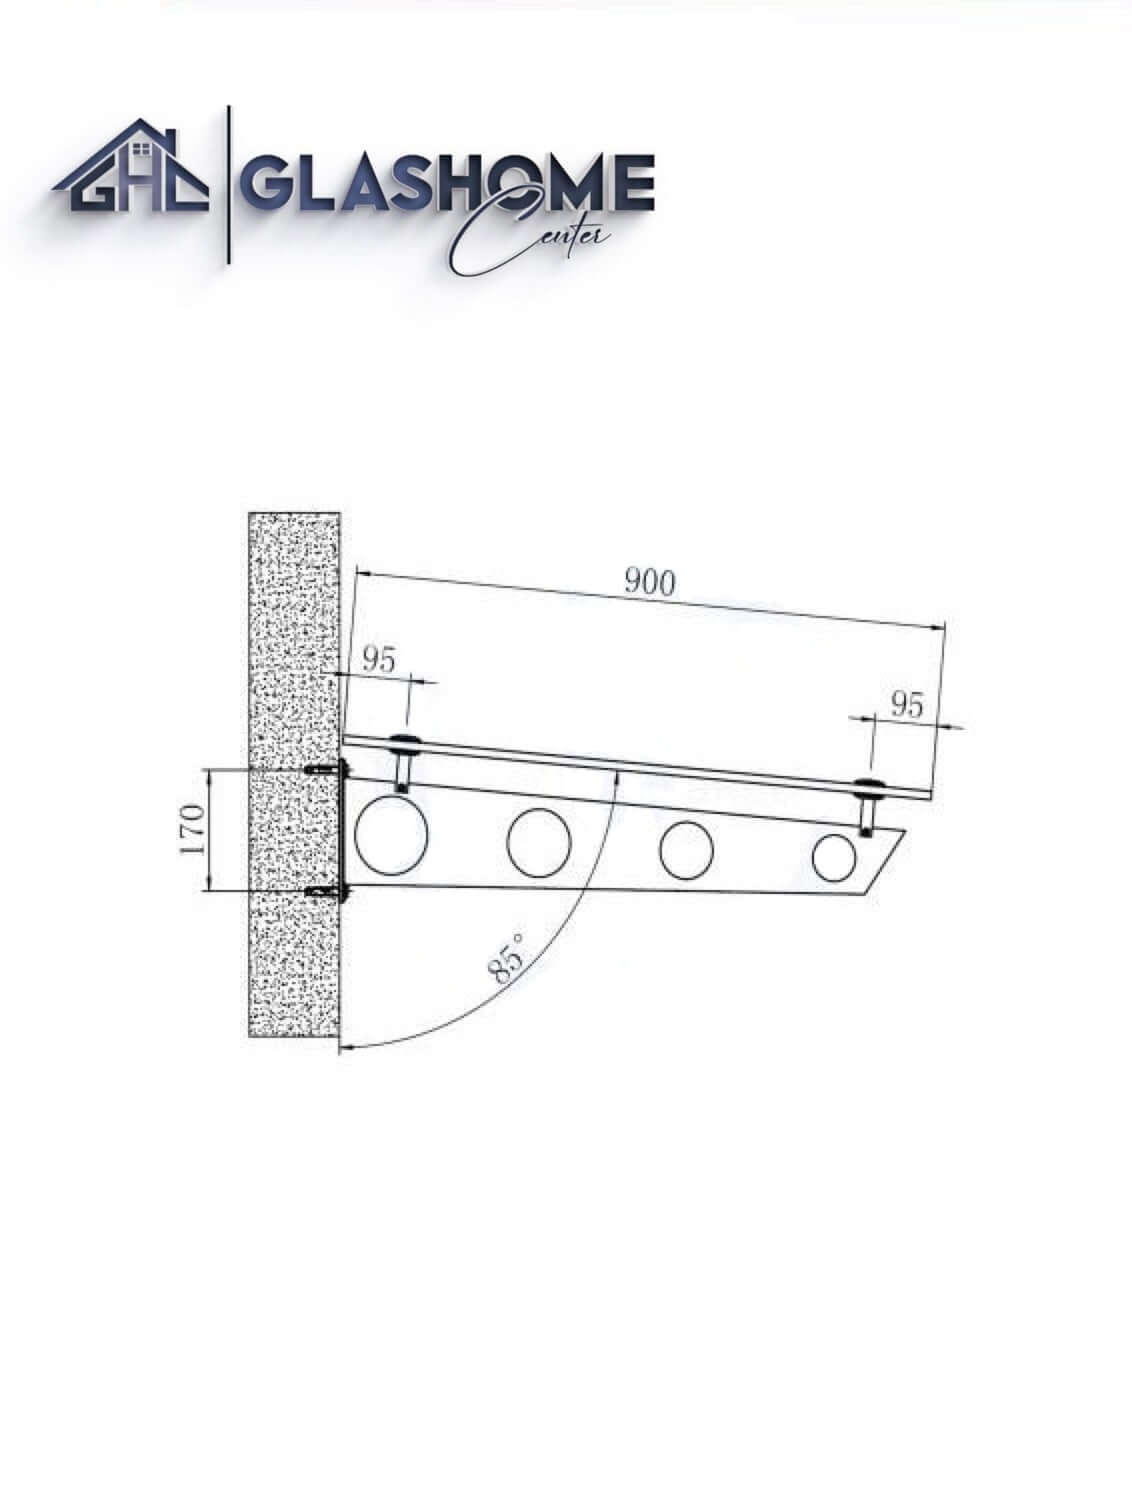 GlasHomeCenter - glass canopy - Clear glass - 190x90cm - 13.1mm VSG - incl. 2 schwarze Edelstahlhalterungen Variante "Stockholm"